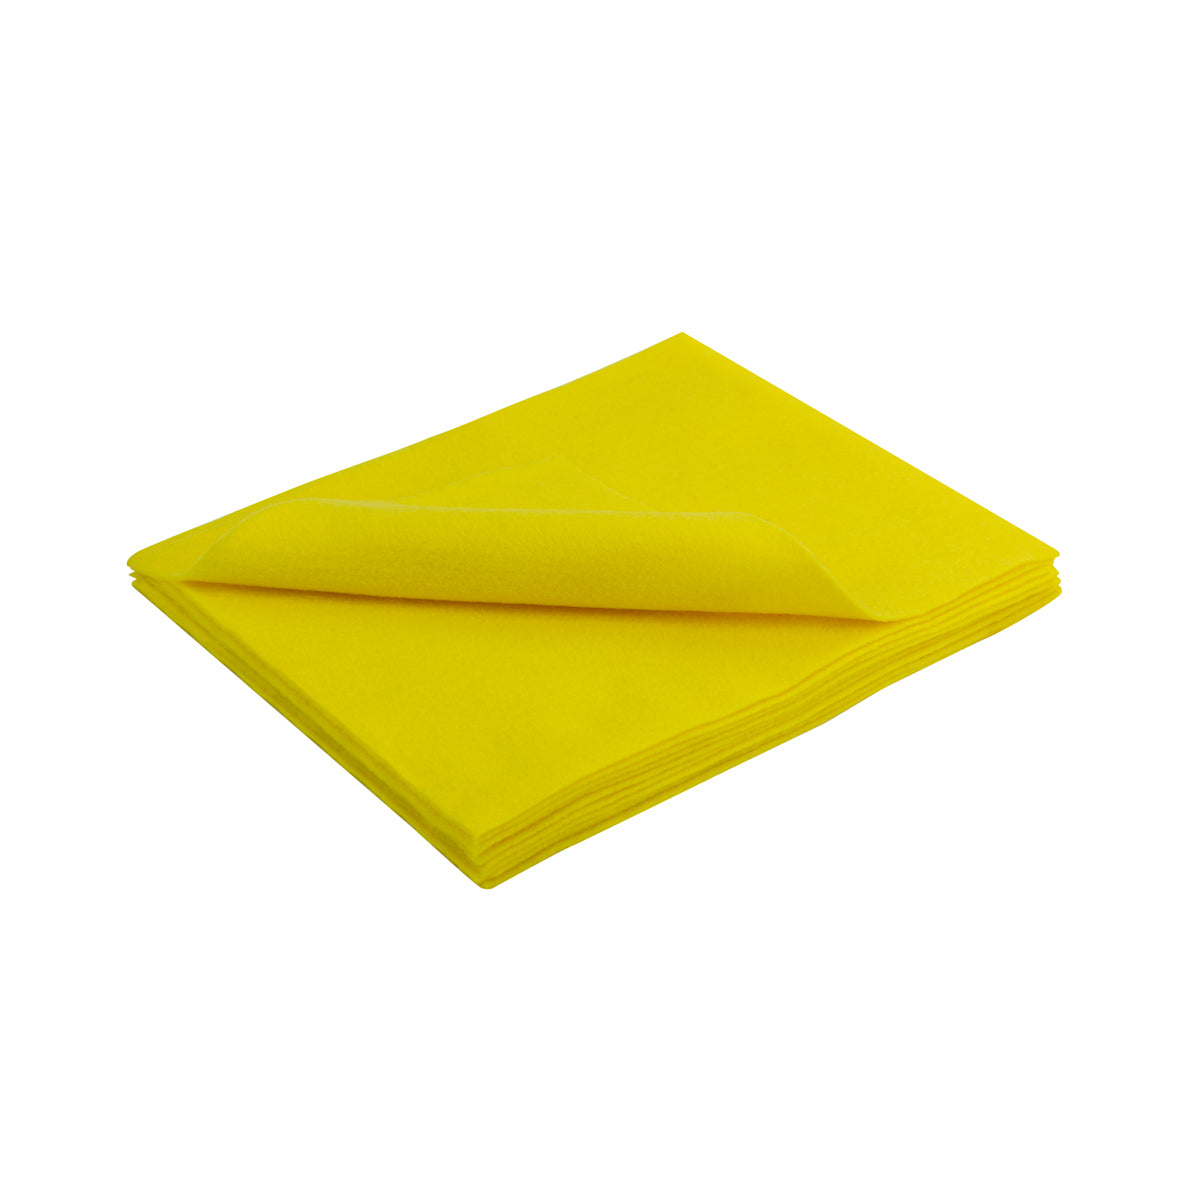 Yellow Felt Sheets 9 x 12